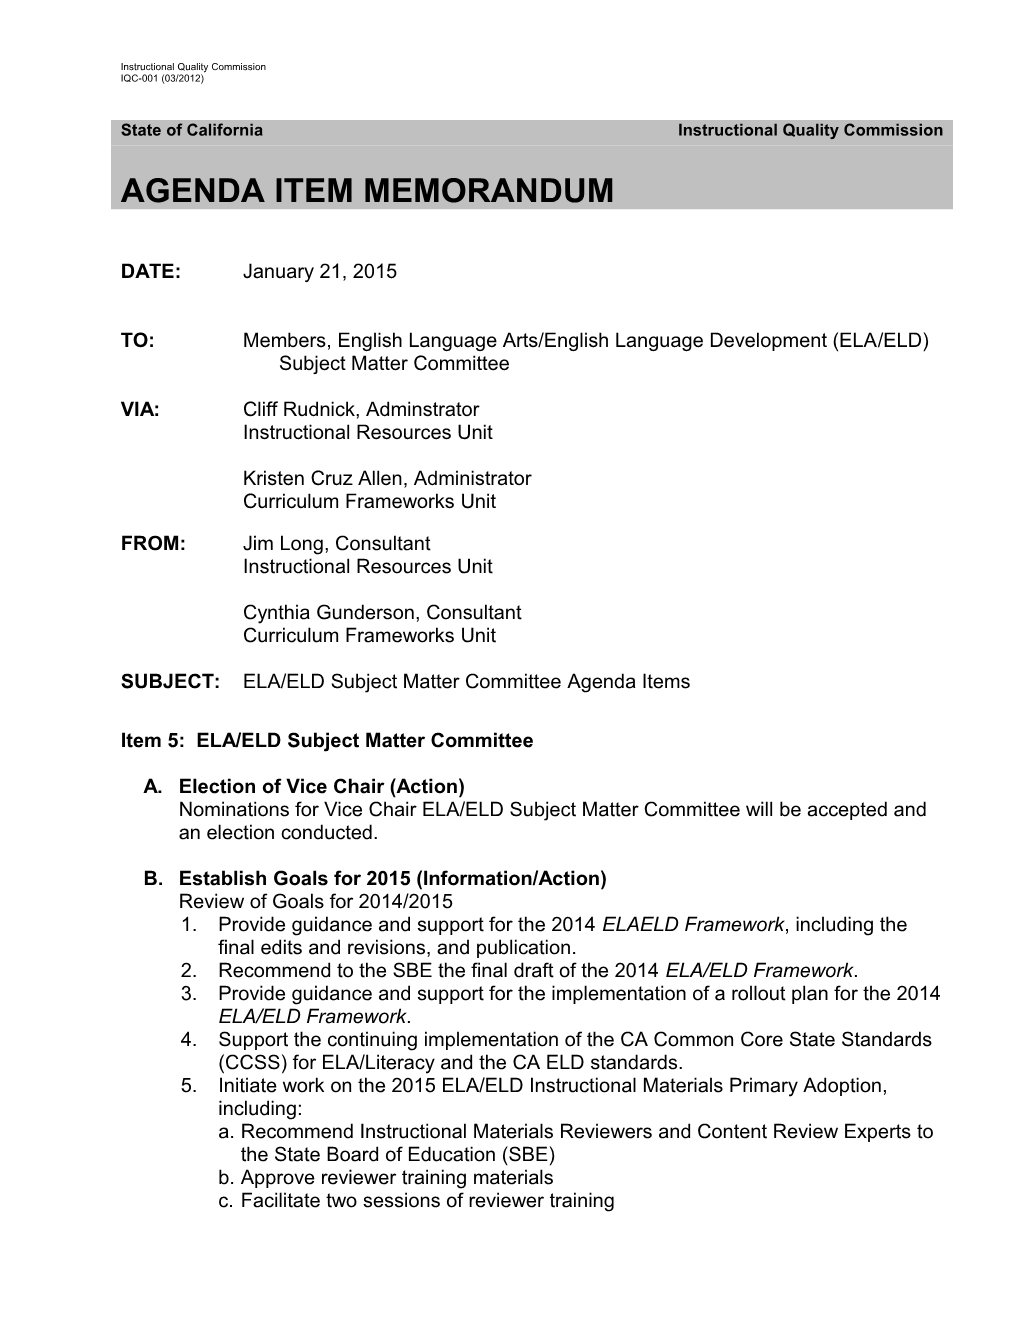 February 2015 ELA/ELD SMC - Instructional Quality Commission (CA Dept of Education)